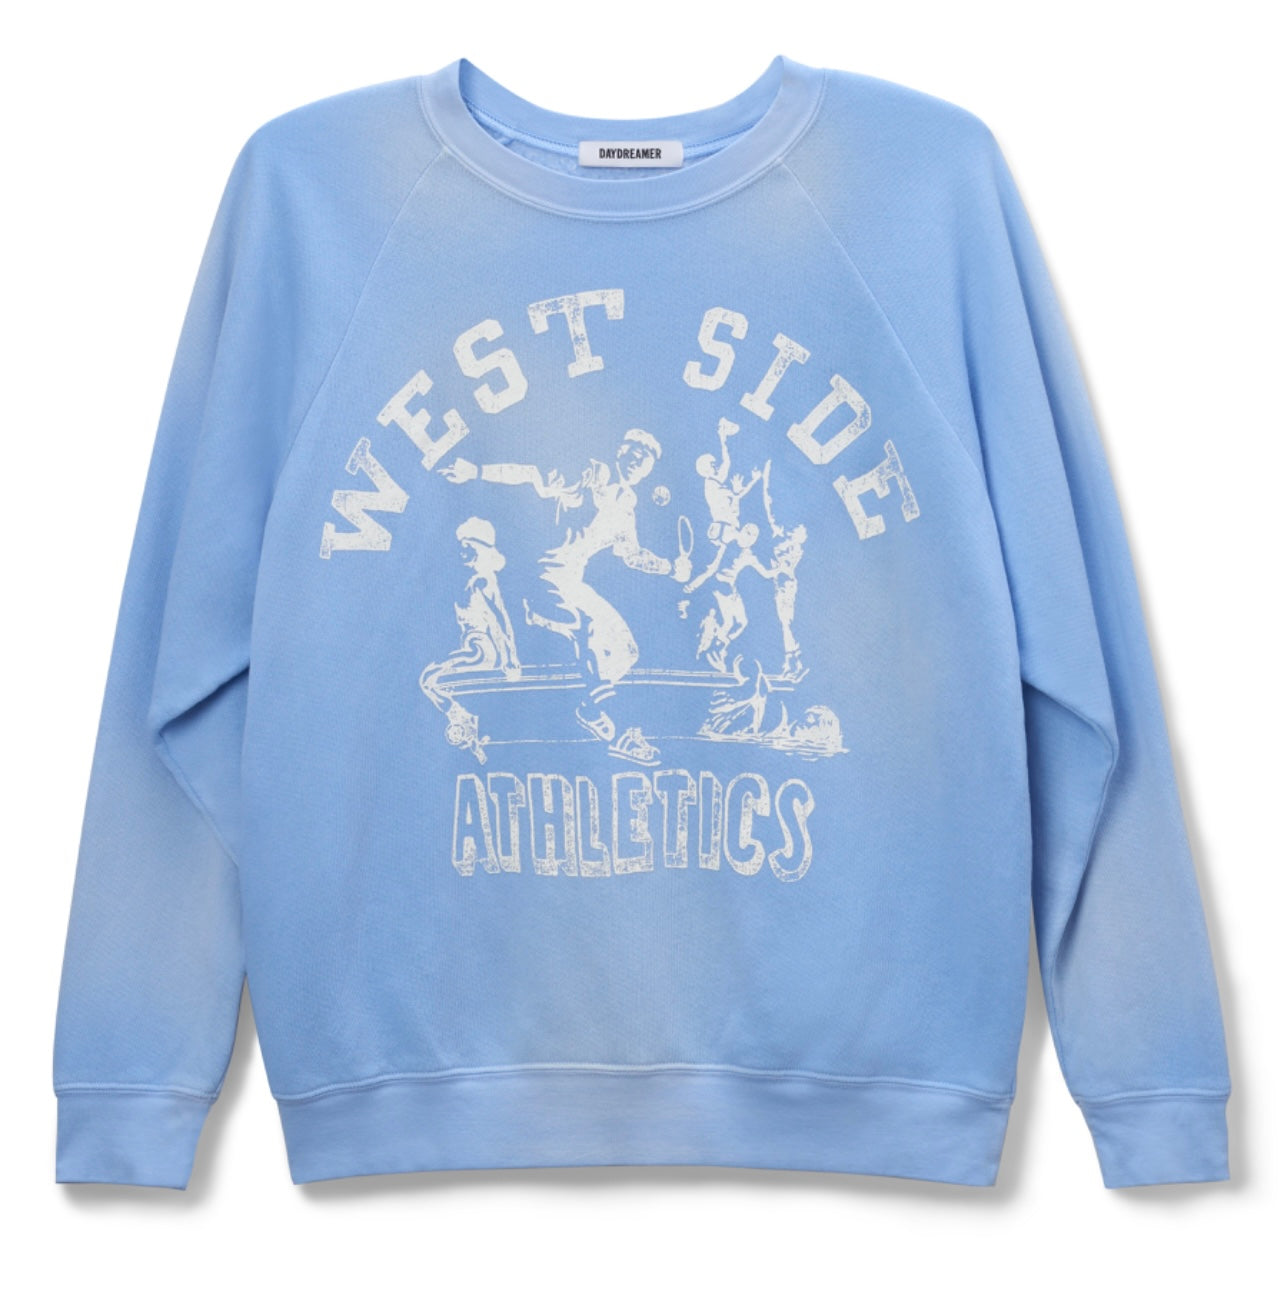 West Side Athletics Sweatshirt